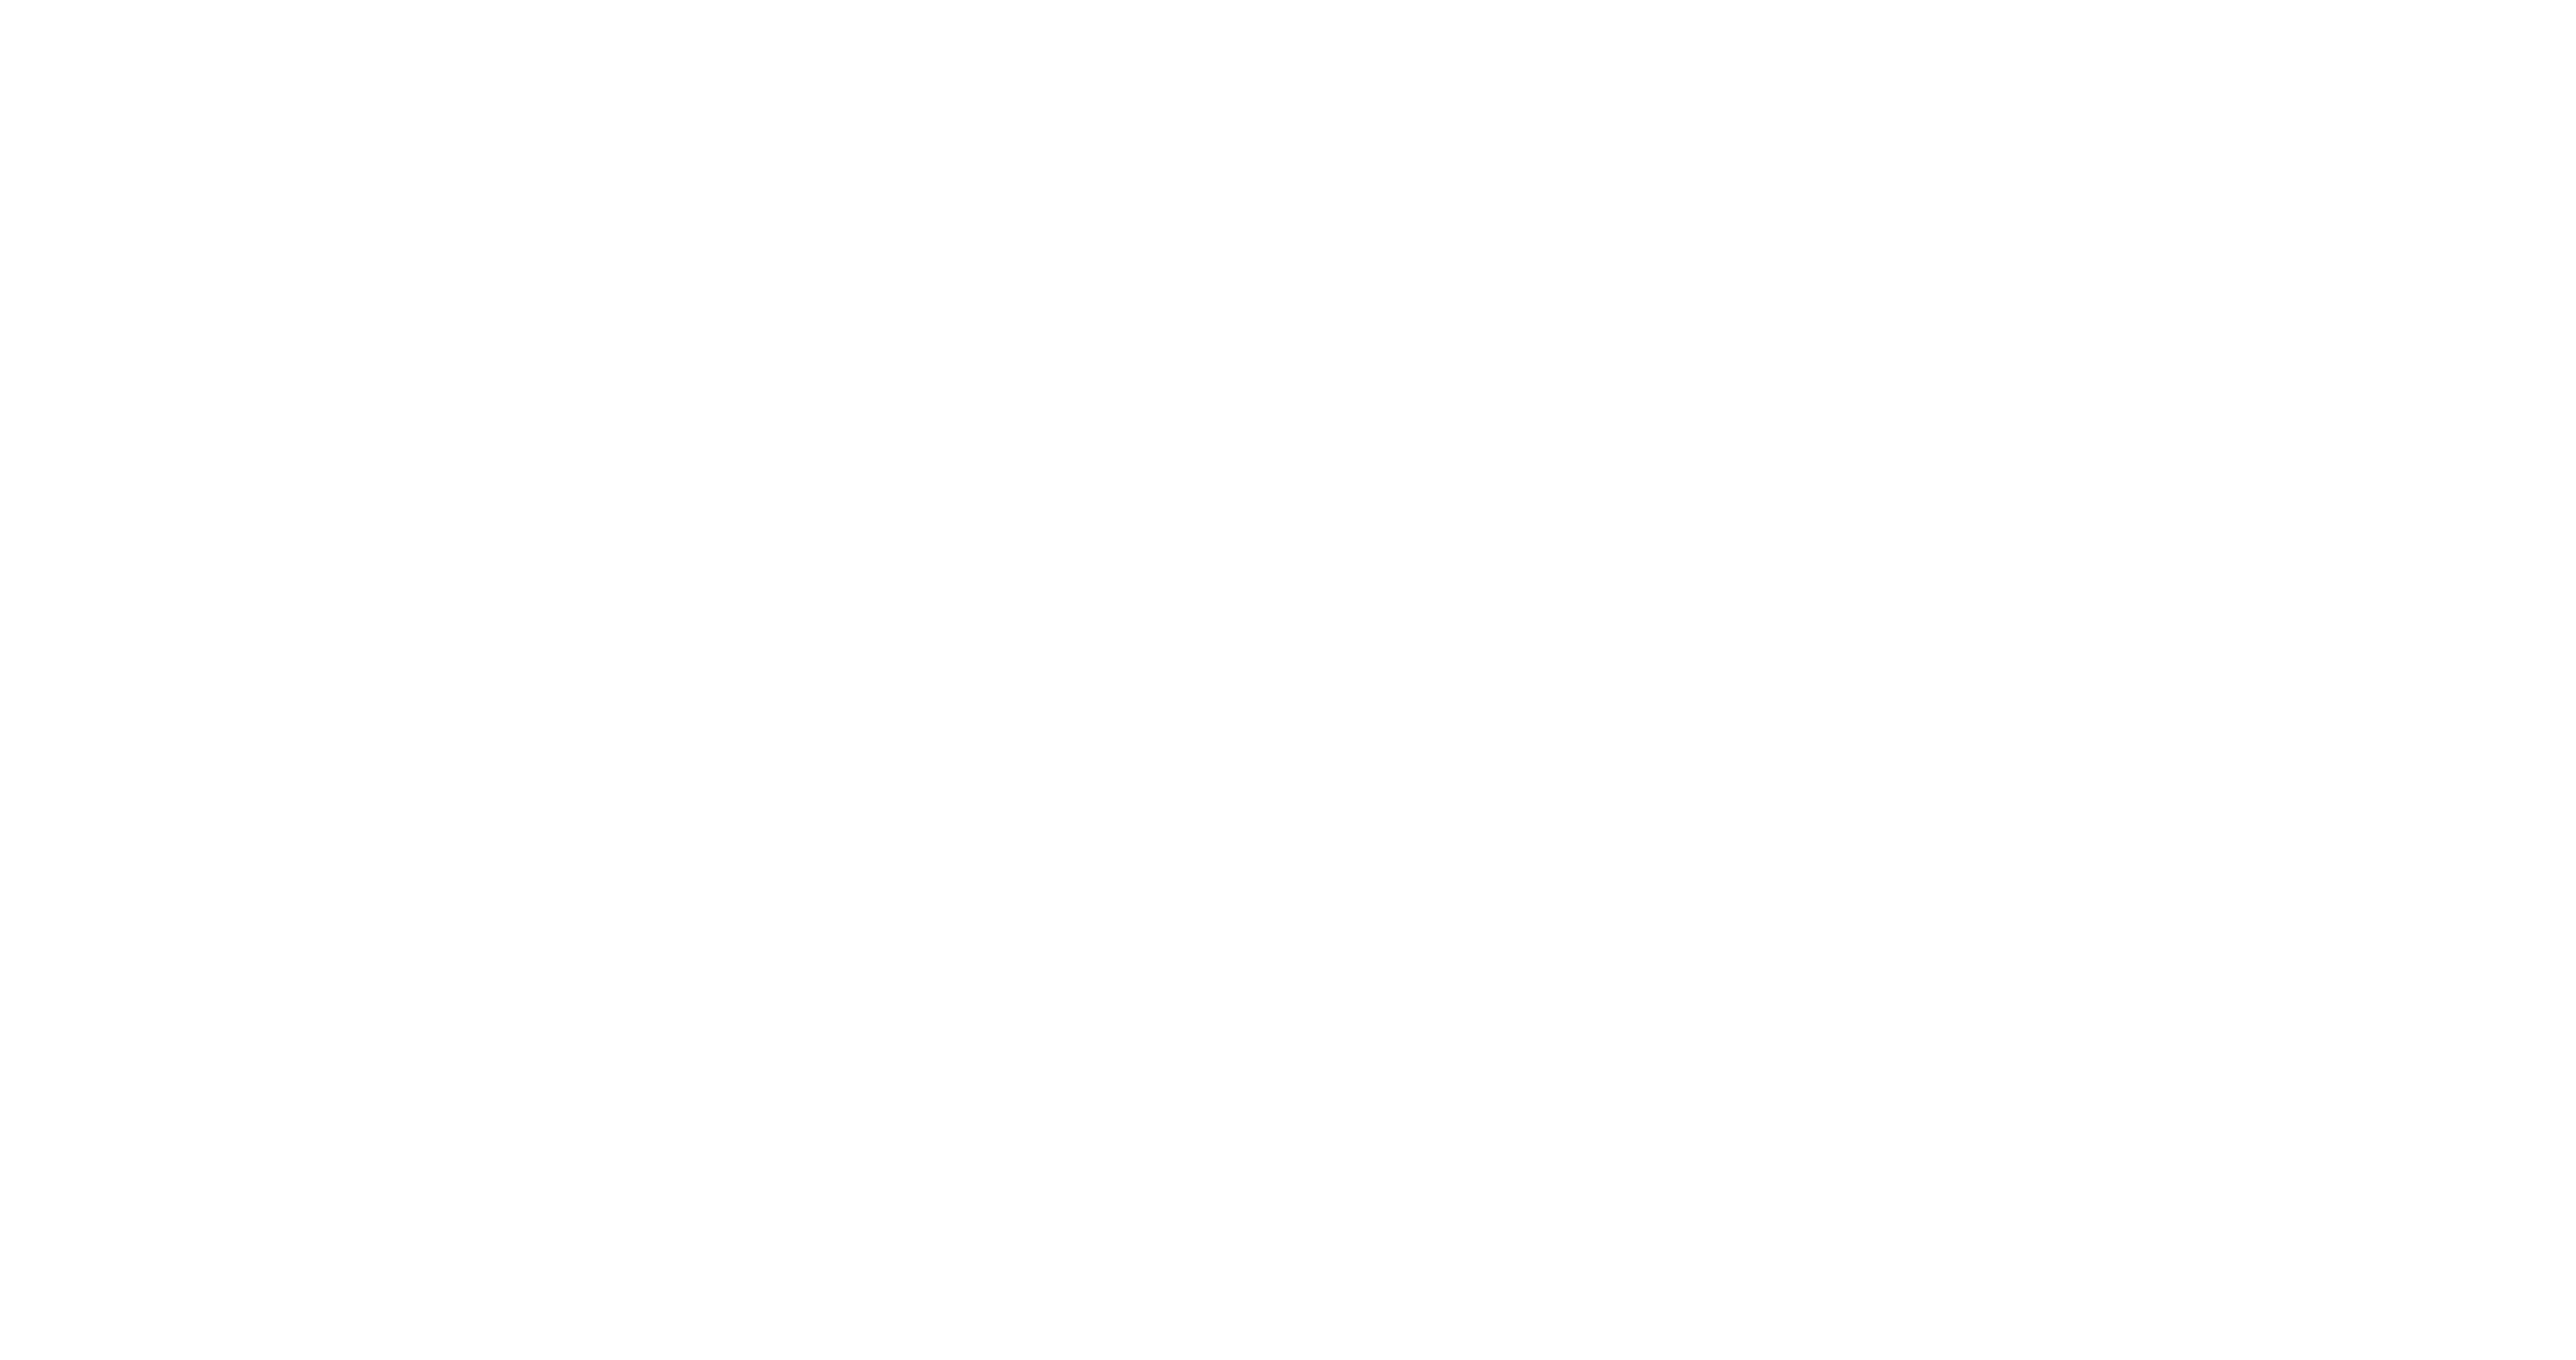 Appvizer